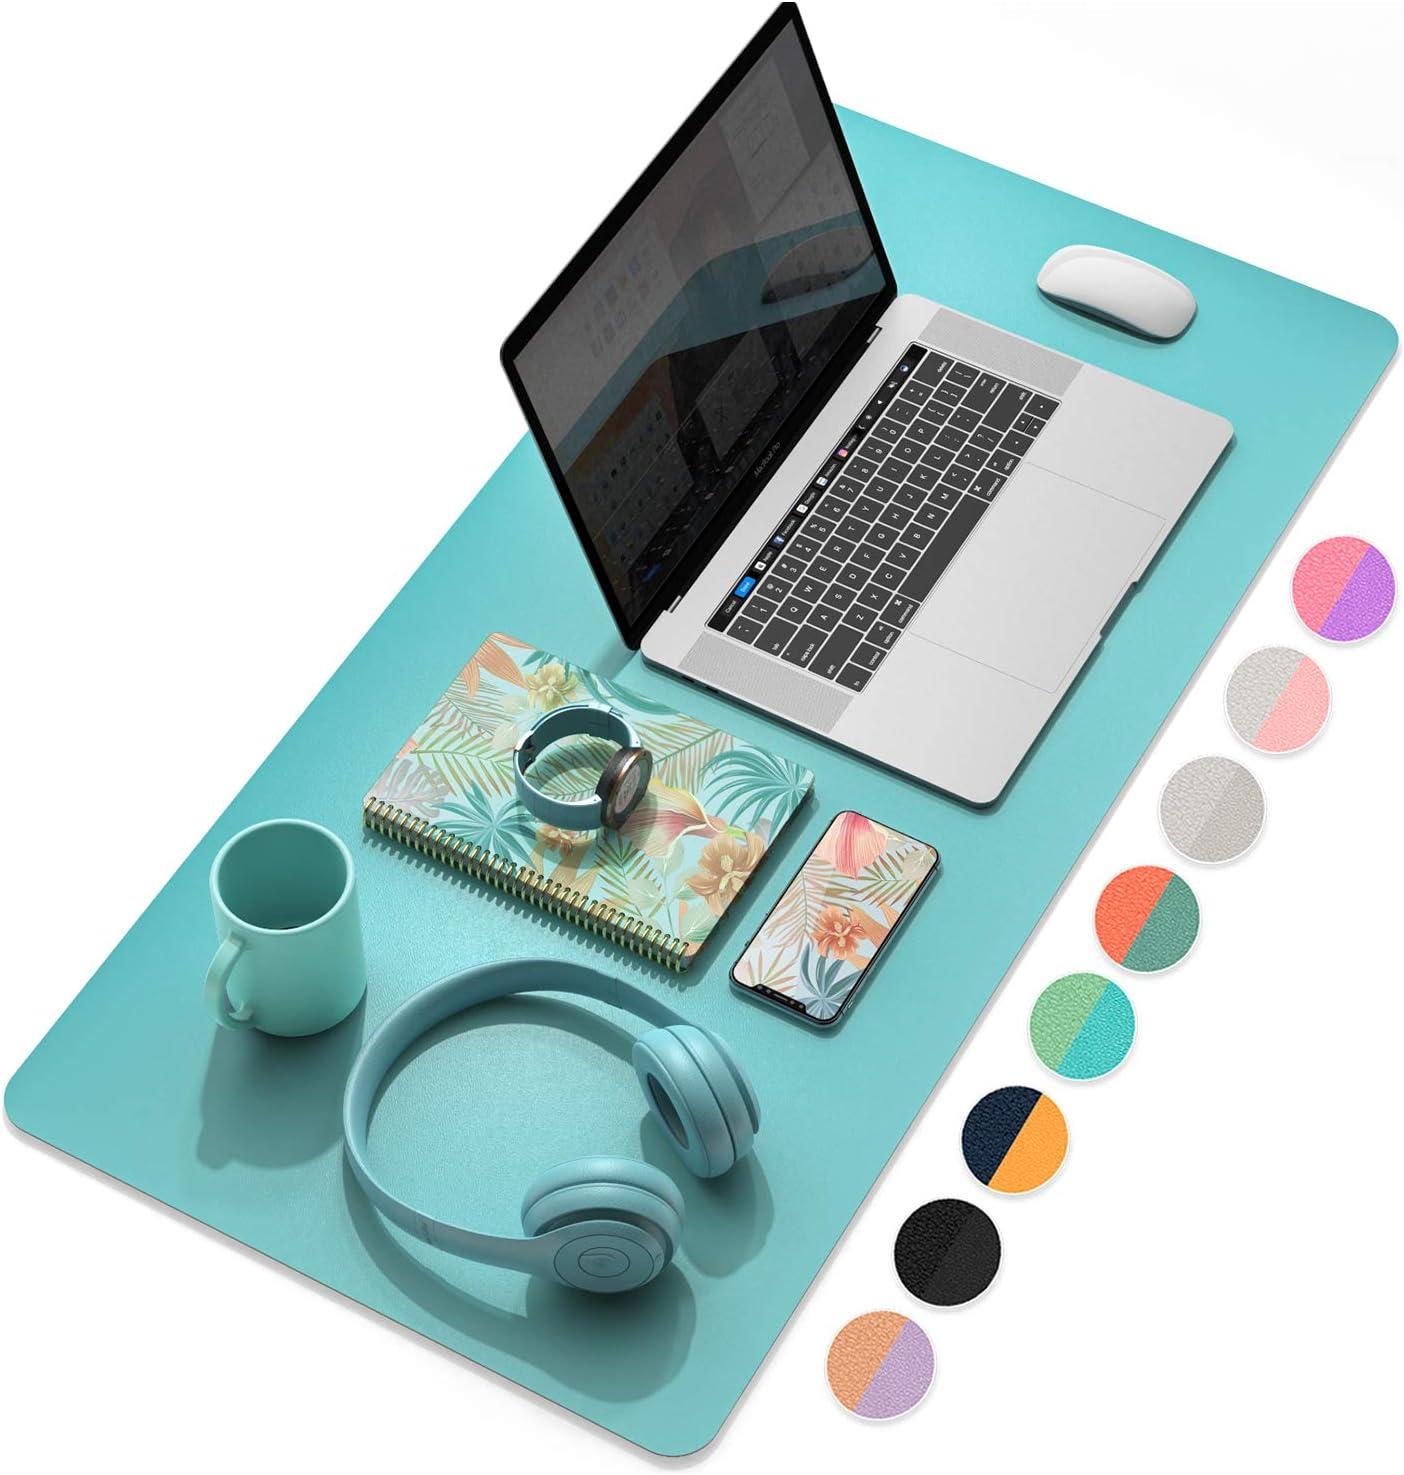 YSAGi Desk Pad, Desk Mat, 31.5" x 15.7" Laptop Leather Desk Pad Protector, Large Leather Desk Blotter for Keyboard and Mouse, Waterproof Desk Writing Pad for Office(Calamine Blue+Cobalt Green)